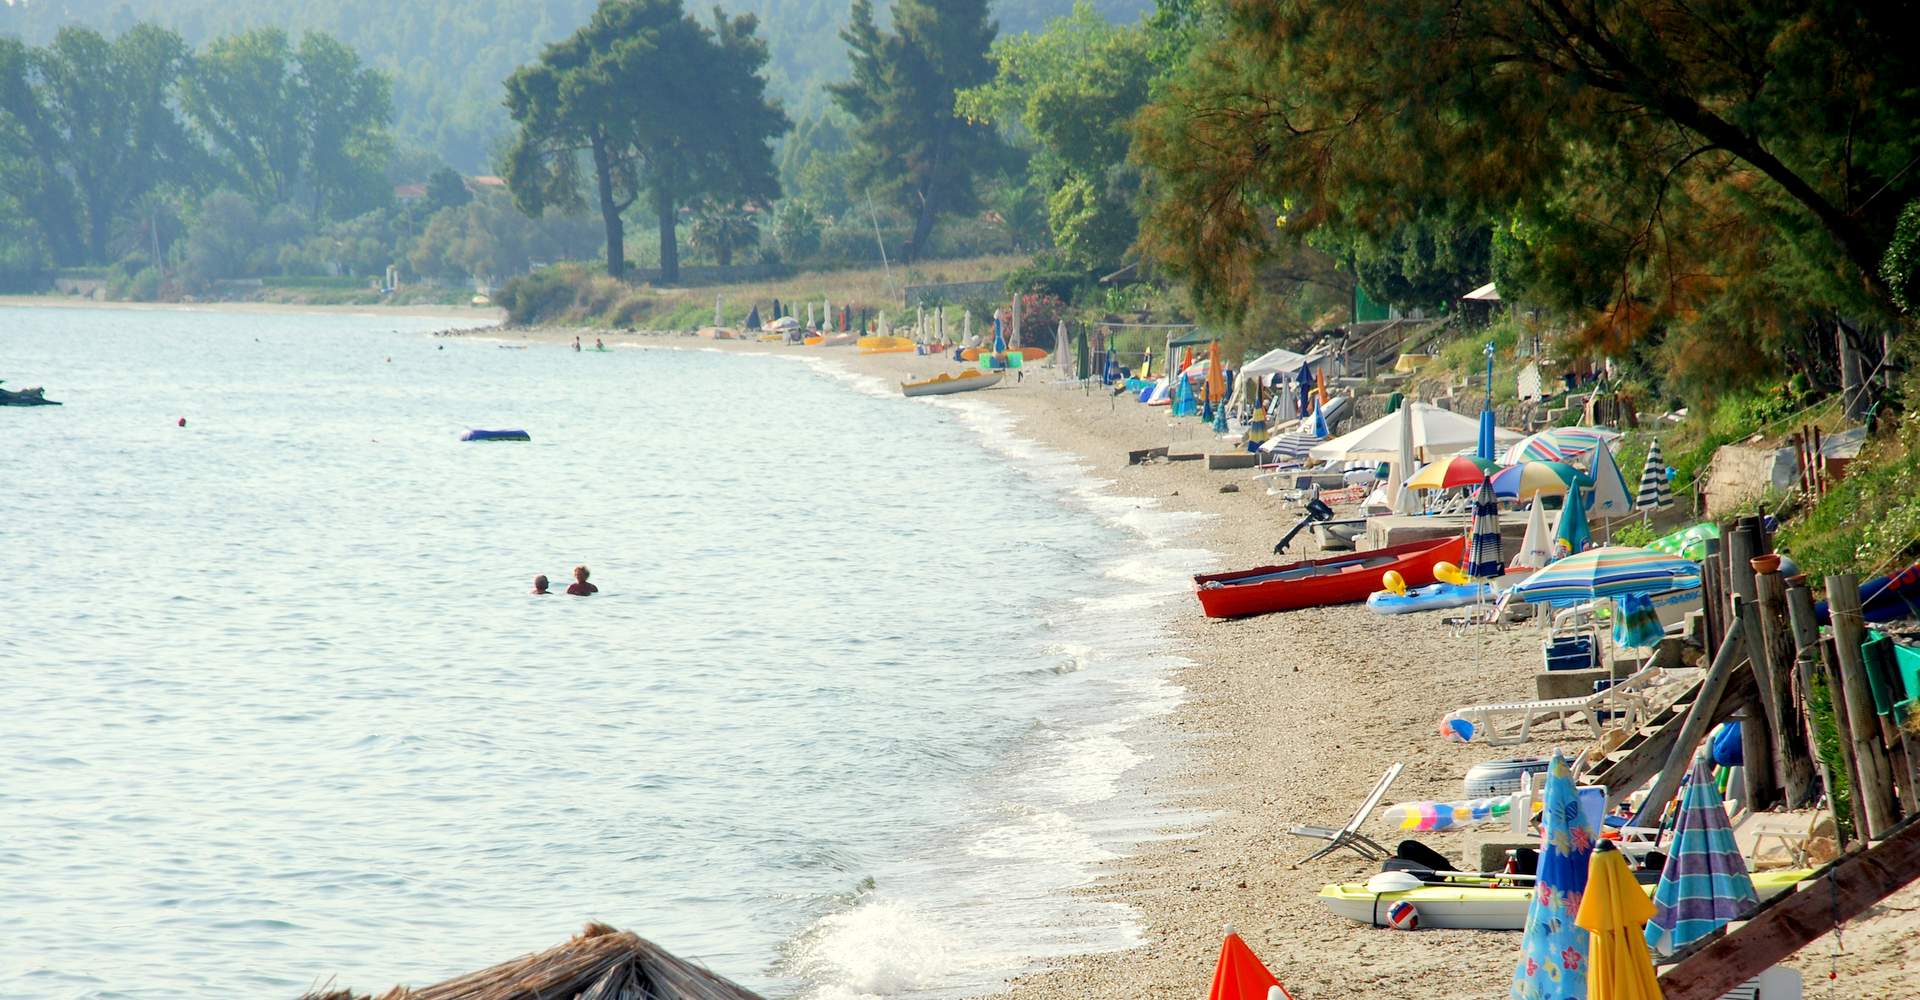 Kriopigi Camping beach, Kassandra, Halkidiki, Greece